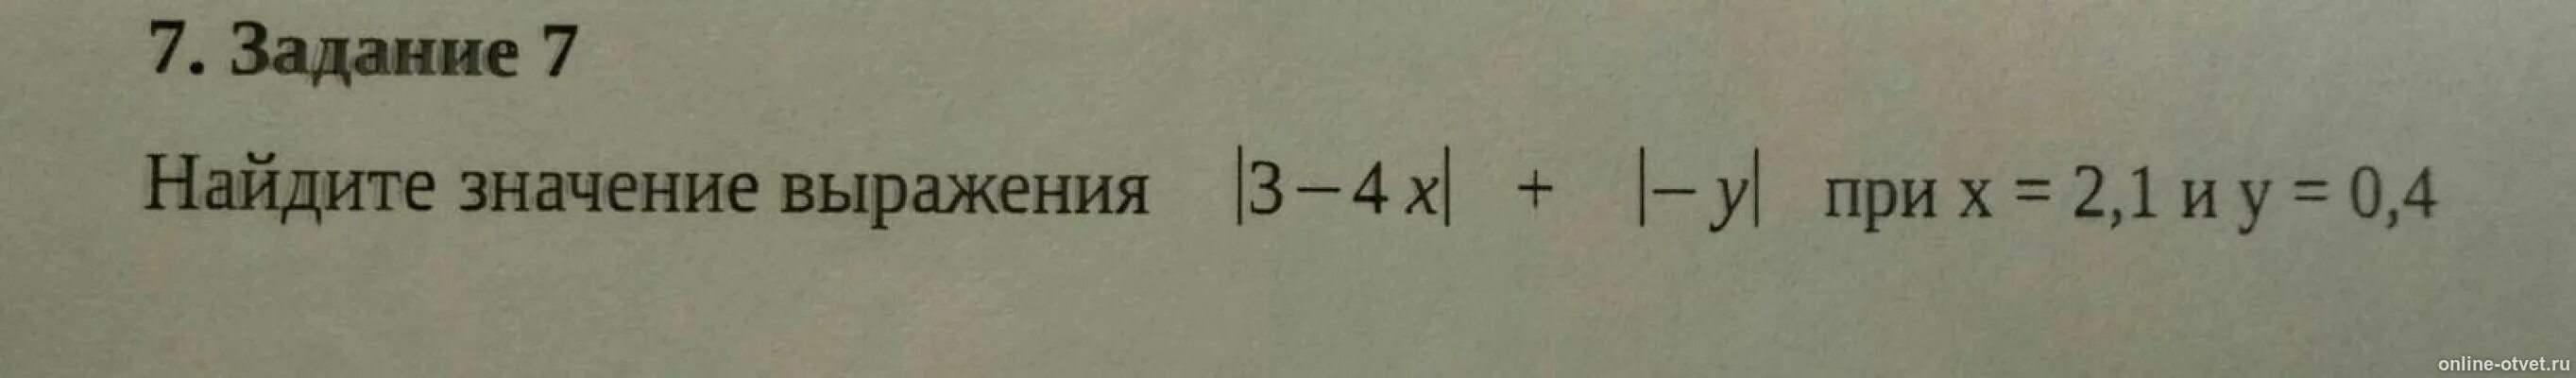 3x 2 y 1 при x 4